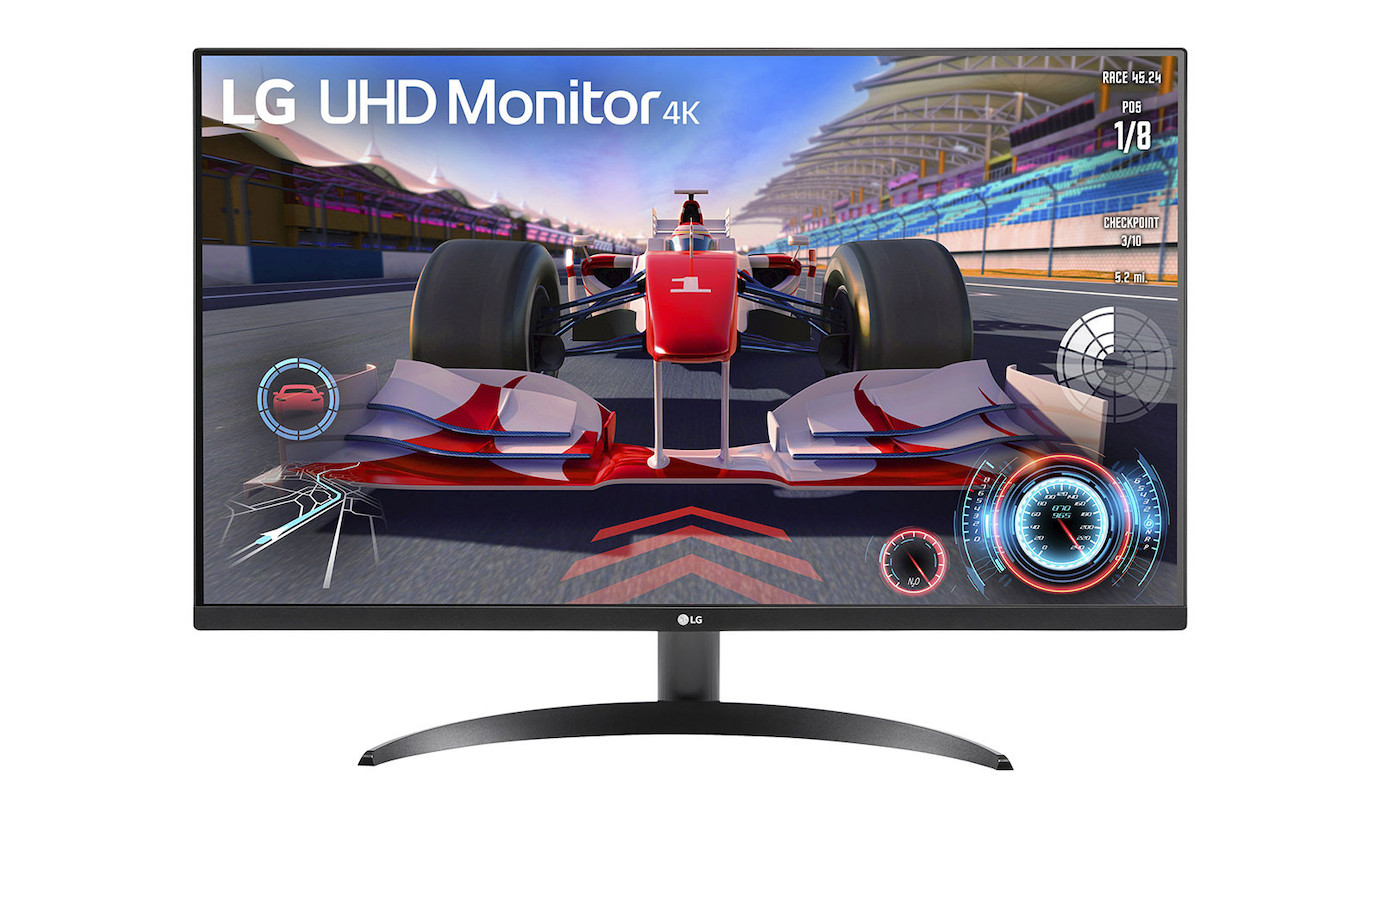 LG 32UR500-B UHD 4K HDR Monitor - Demo